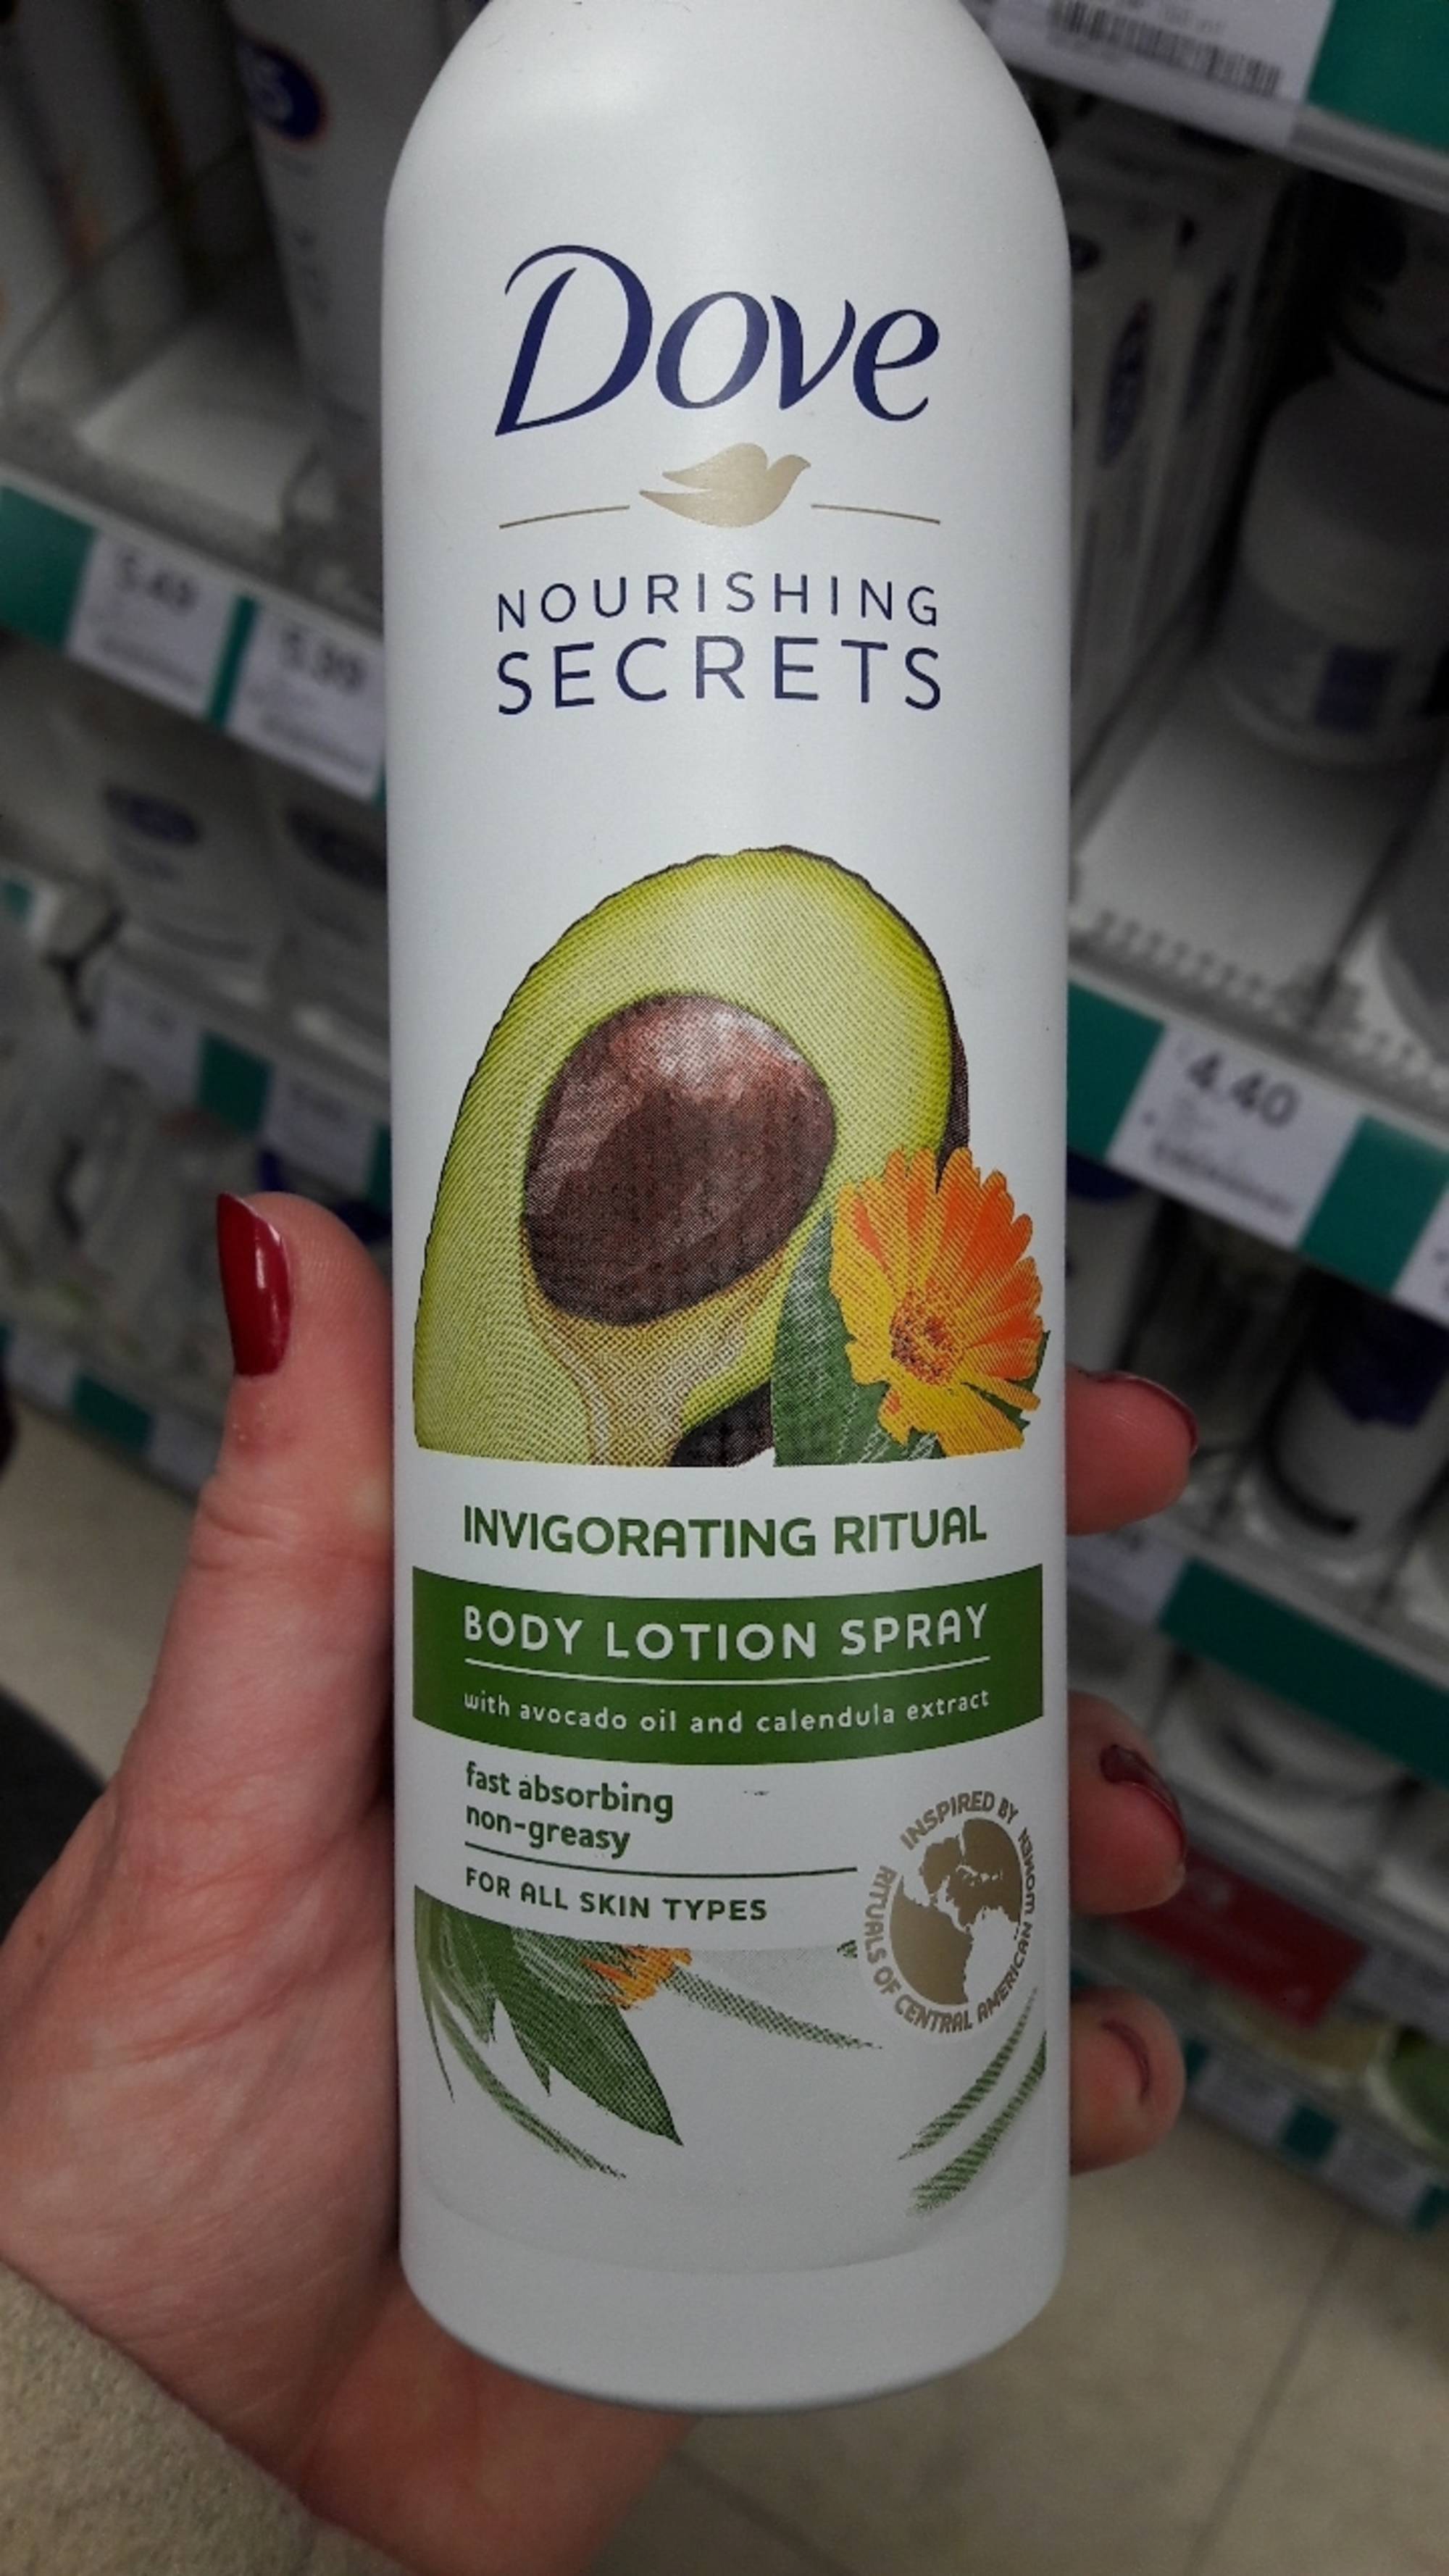 DOVE - Nourishing secrets invigorating ritual - Body lotion spray